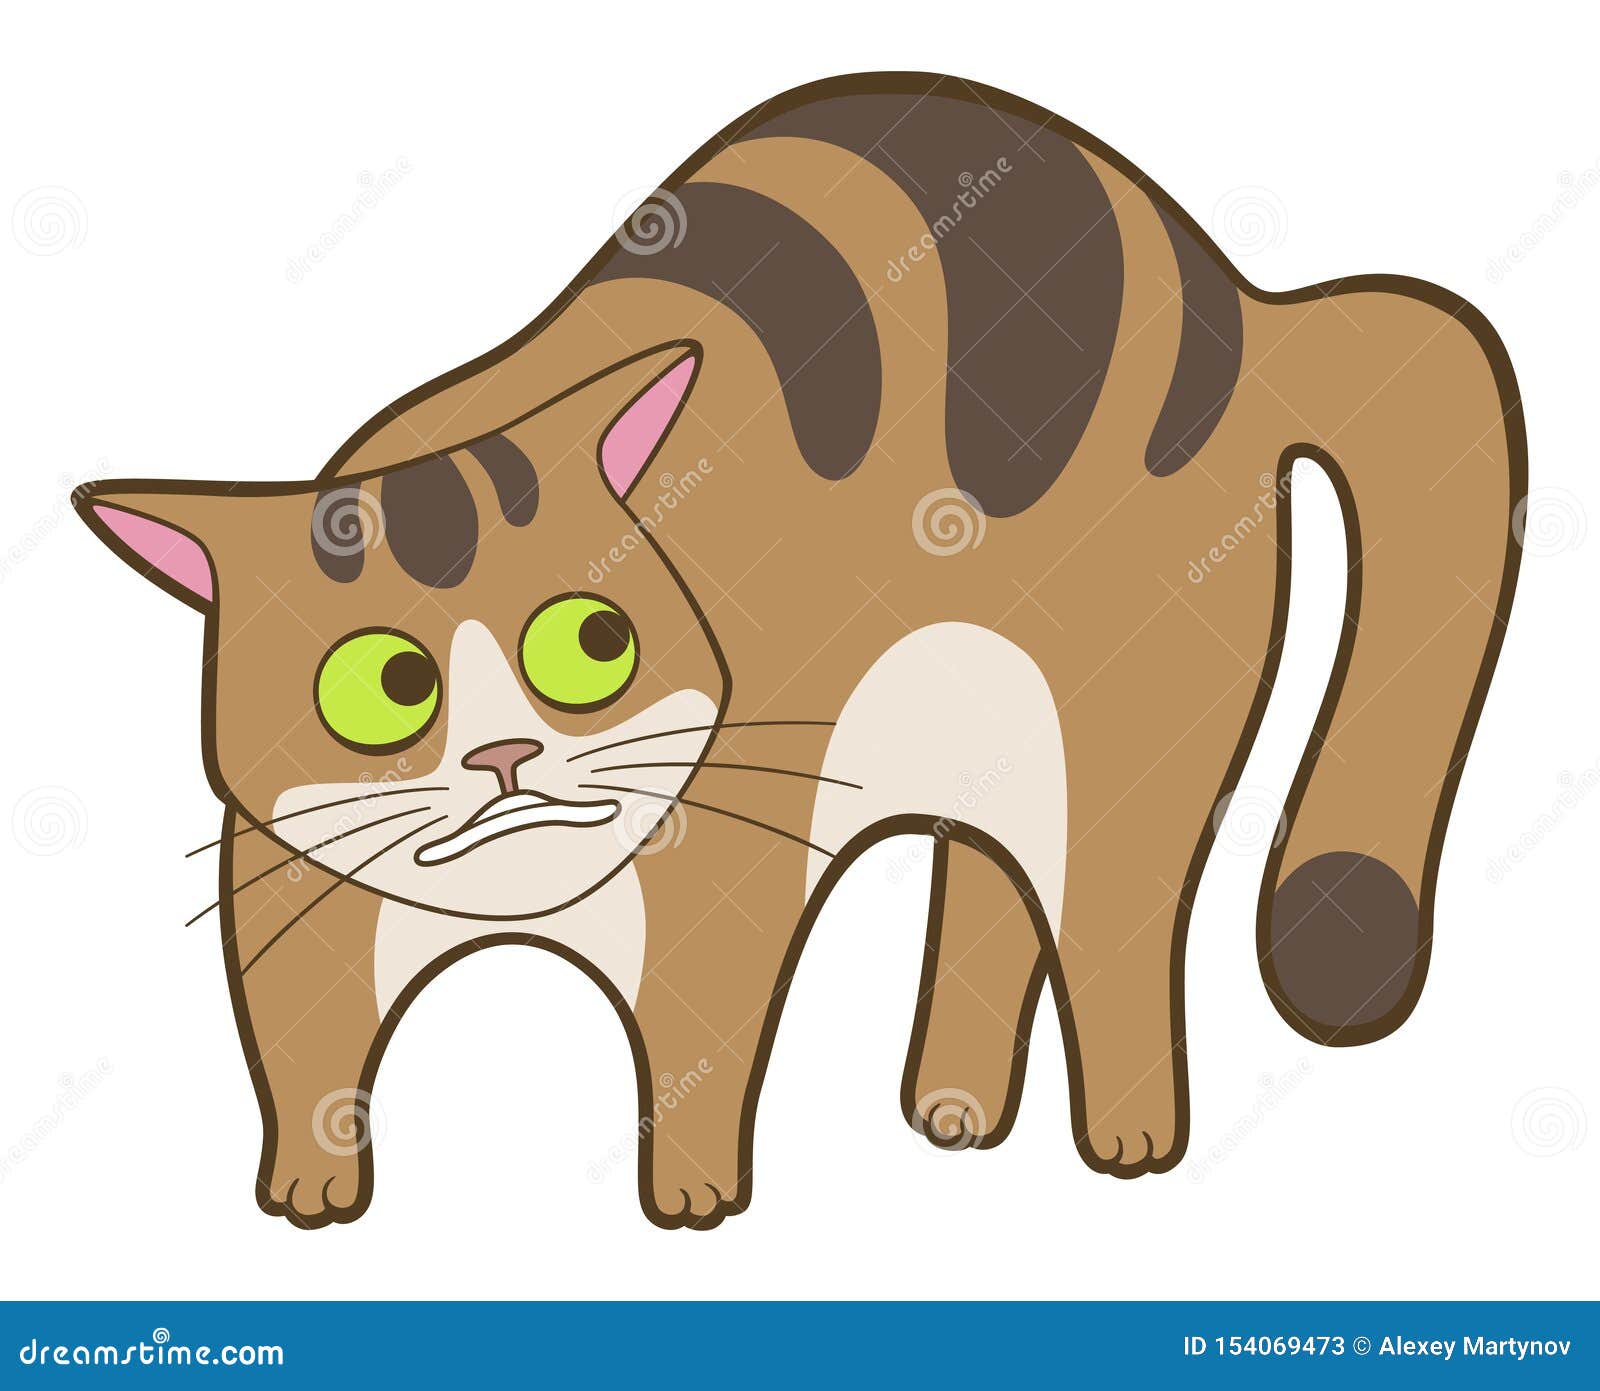 Cute cartoon scared cat stock vector. Illustration of vector - 154069473